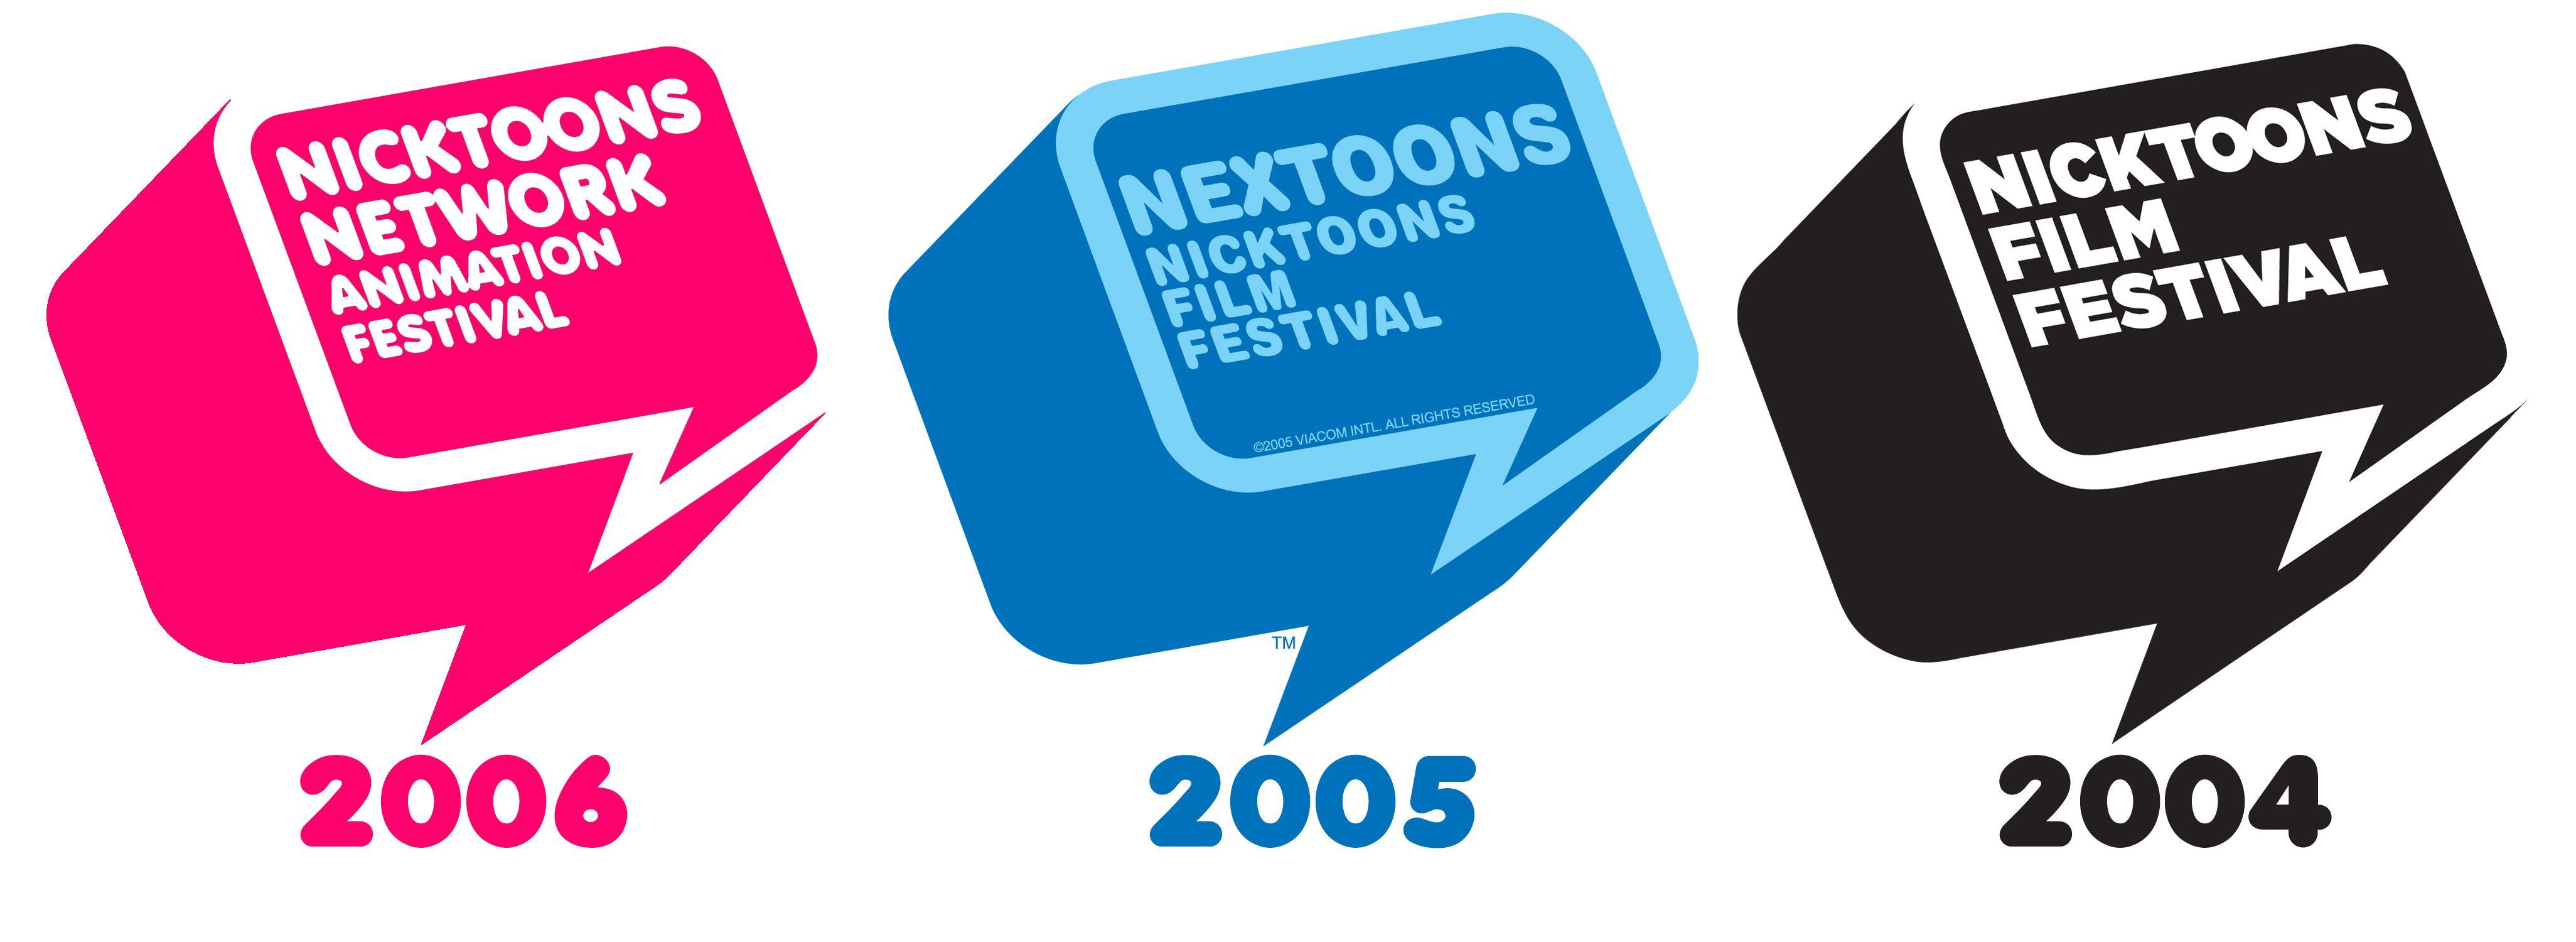 Old Nicktoons Network Logo - Frederator Studios Blogs. The Nicktoons Network Animation Festival